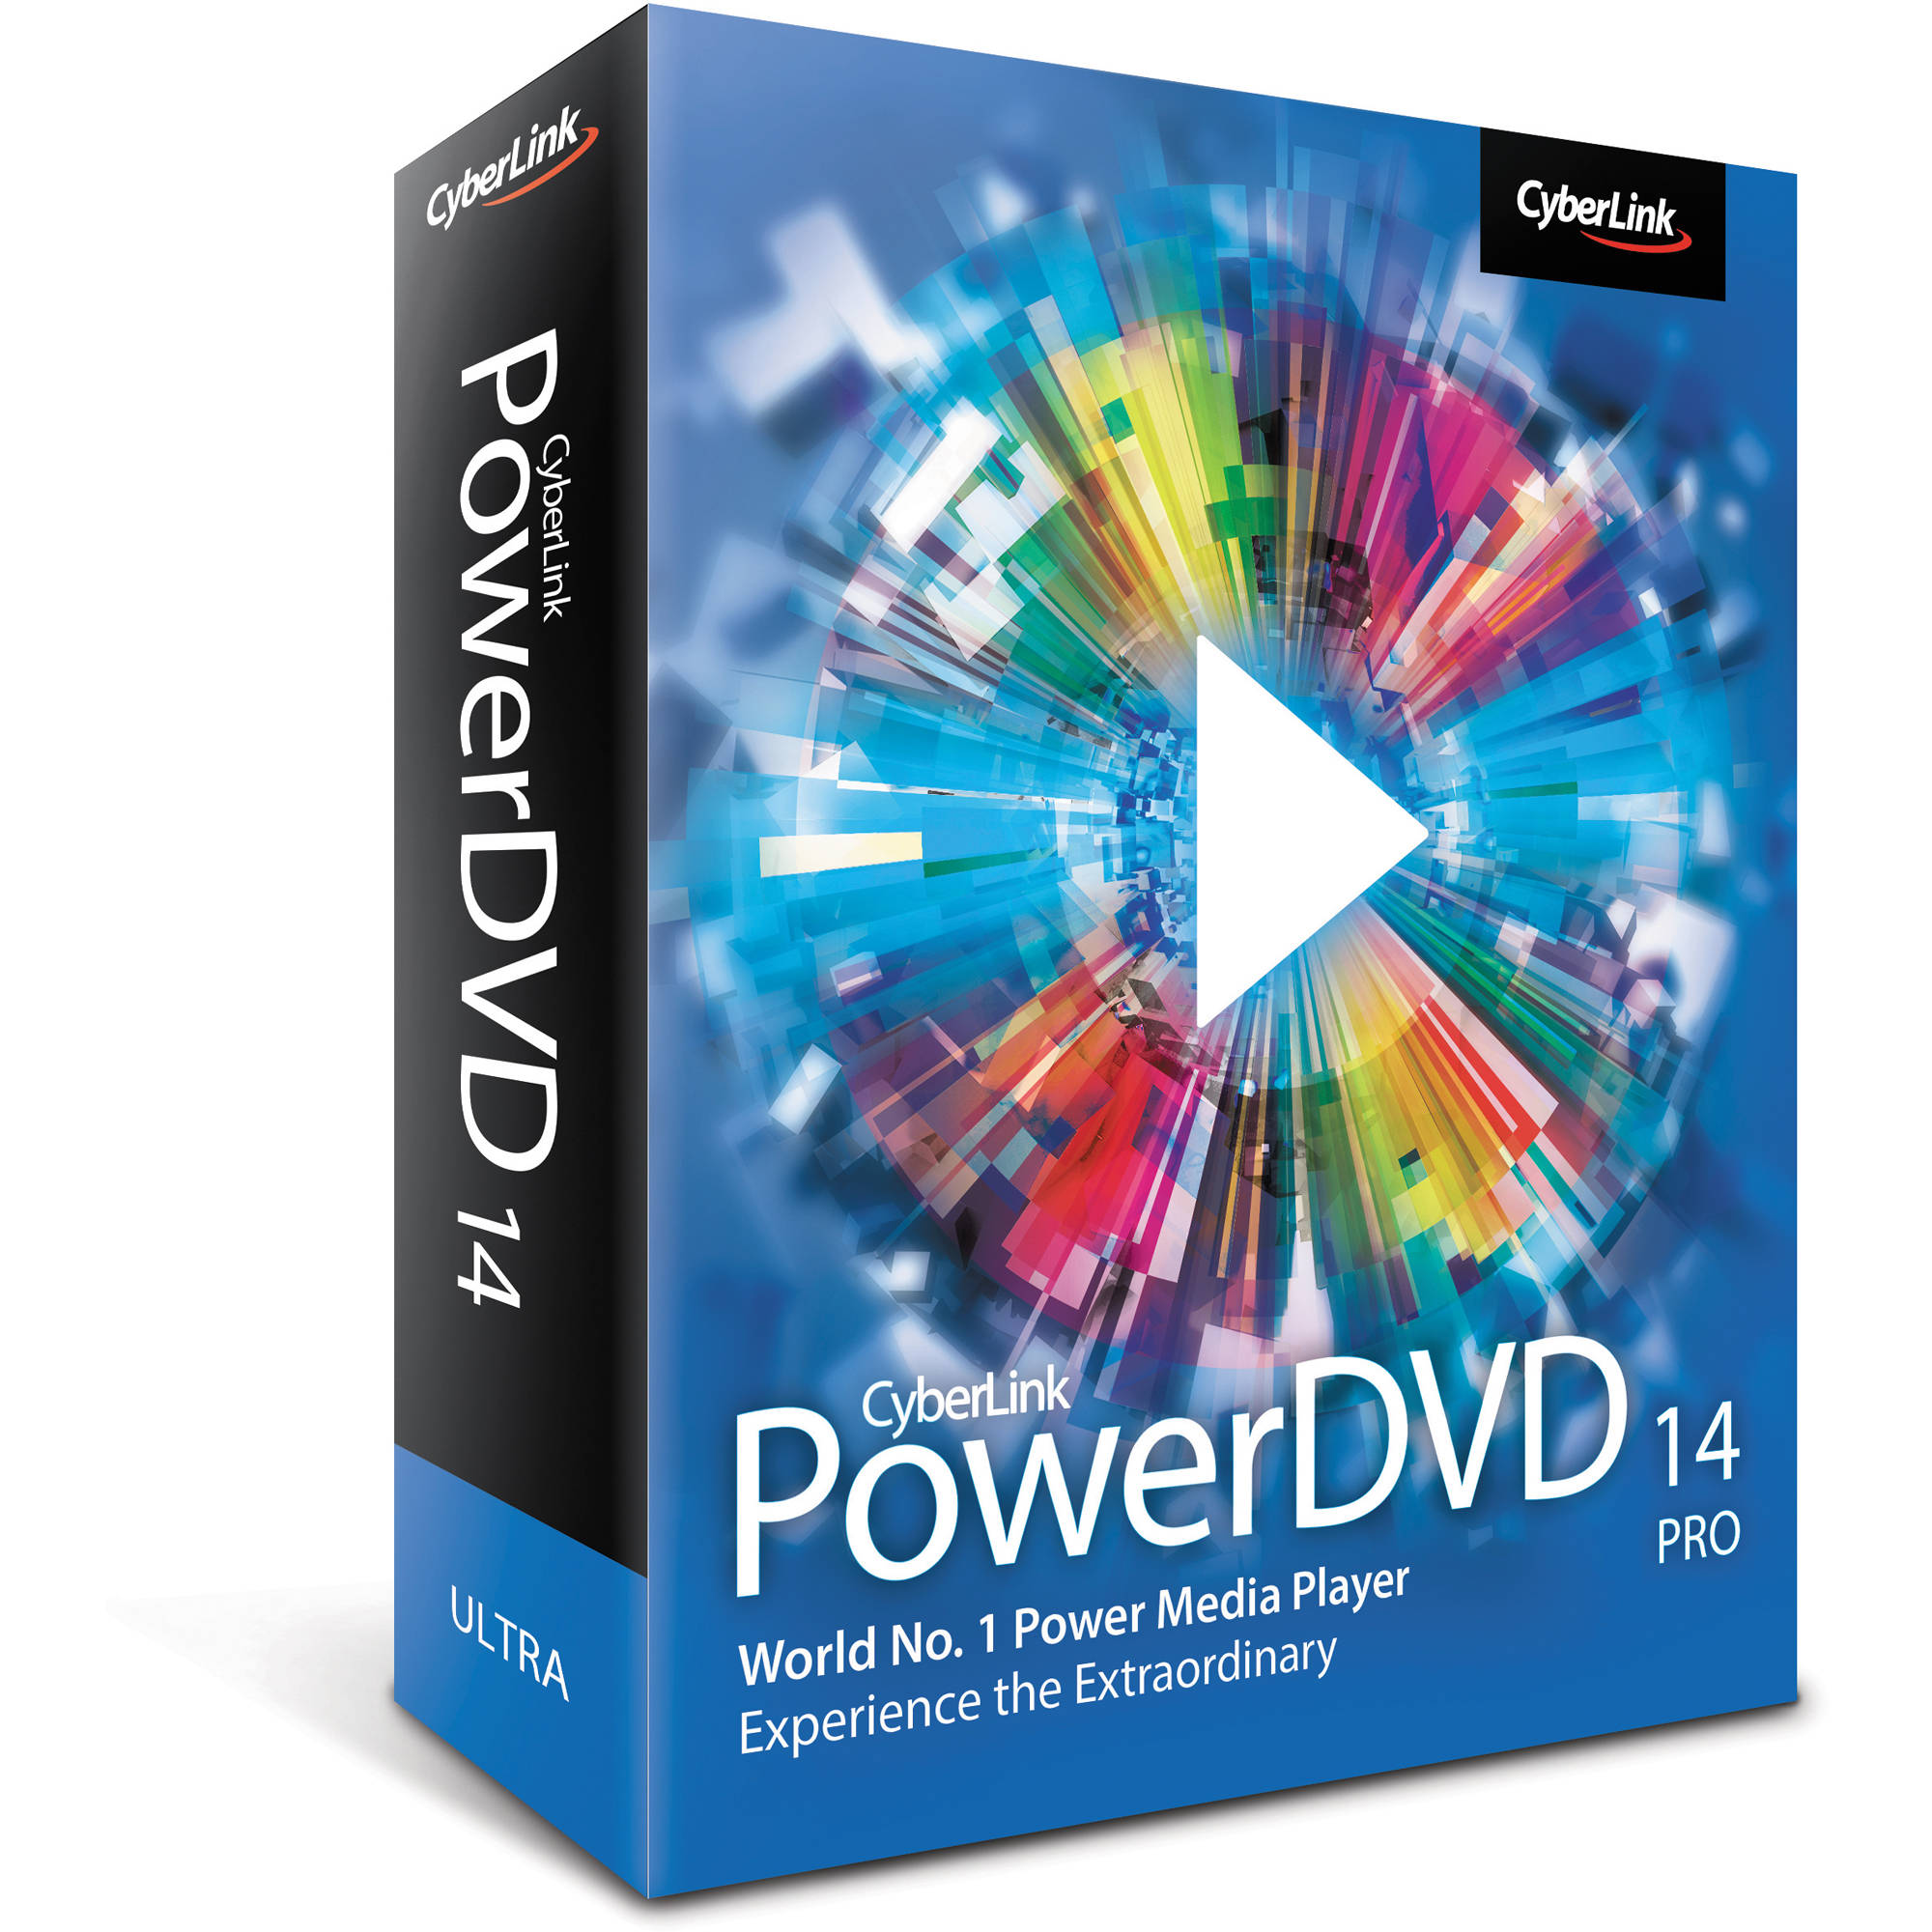 Cyberlink Powerdvd 14 Pro Dvd 0e00 Iwr0 00 B H Photo Video